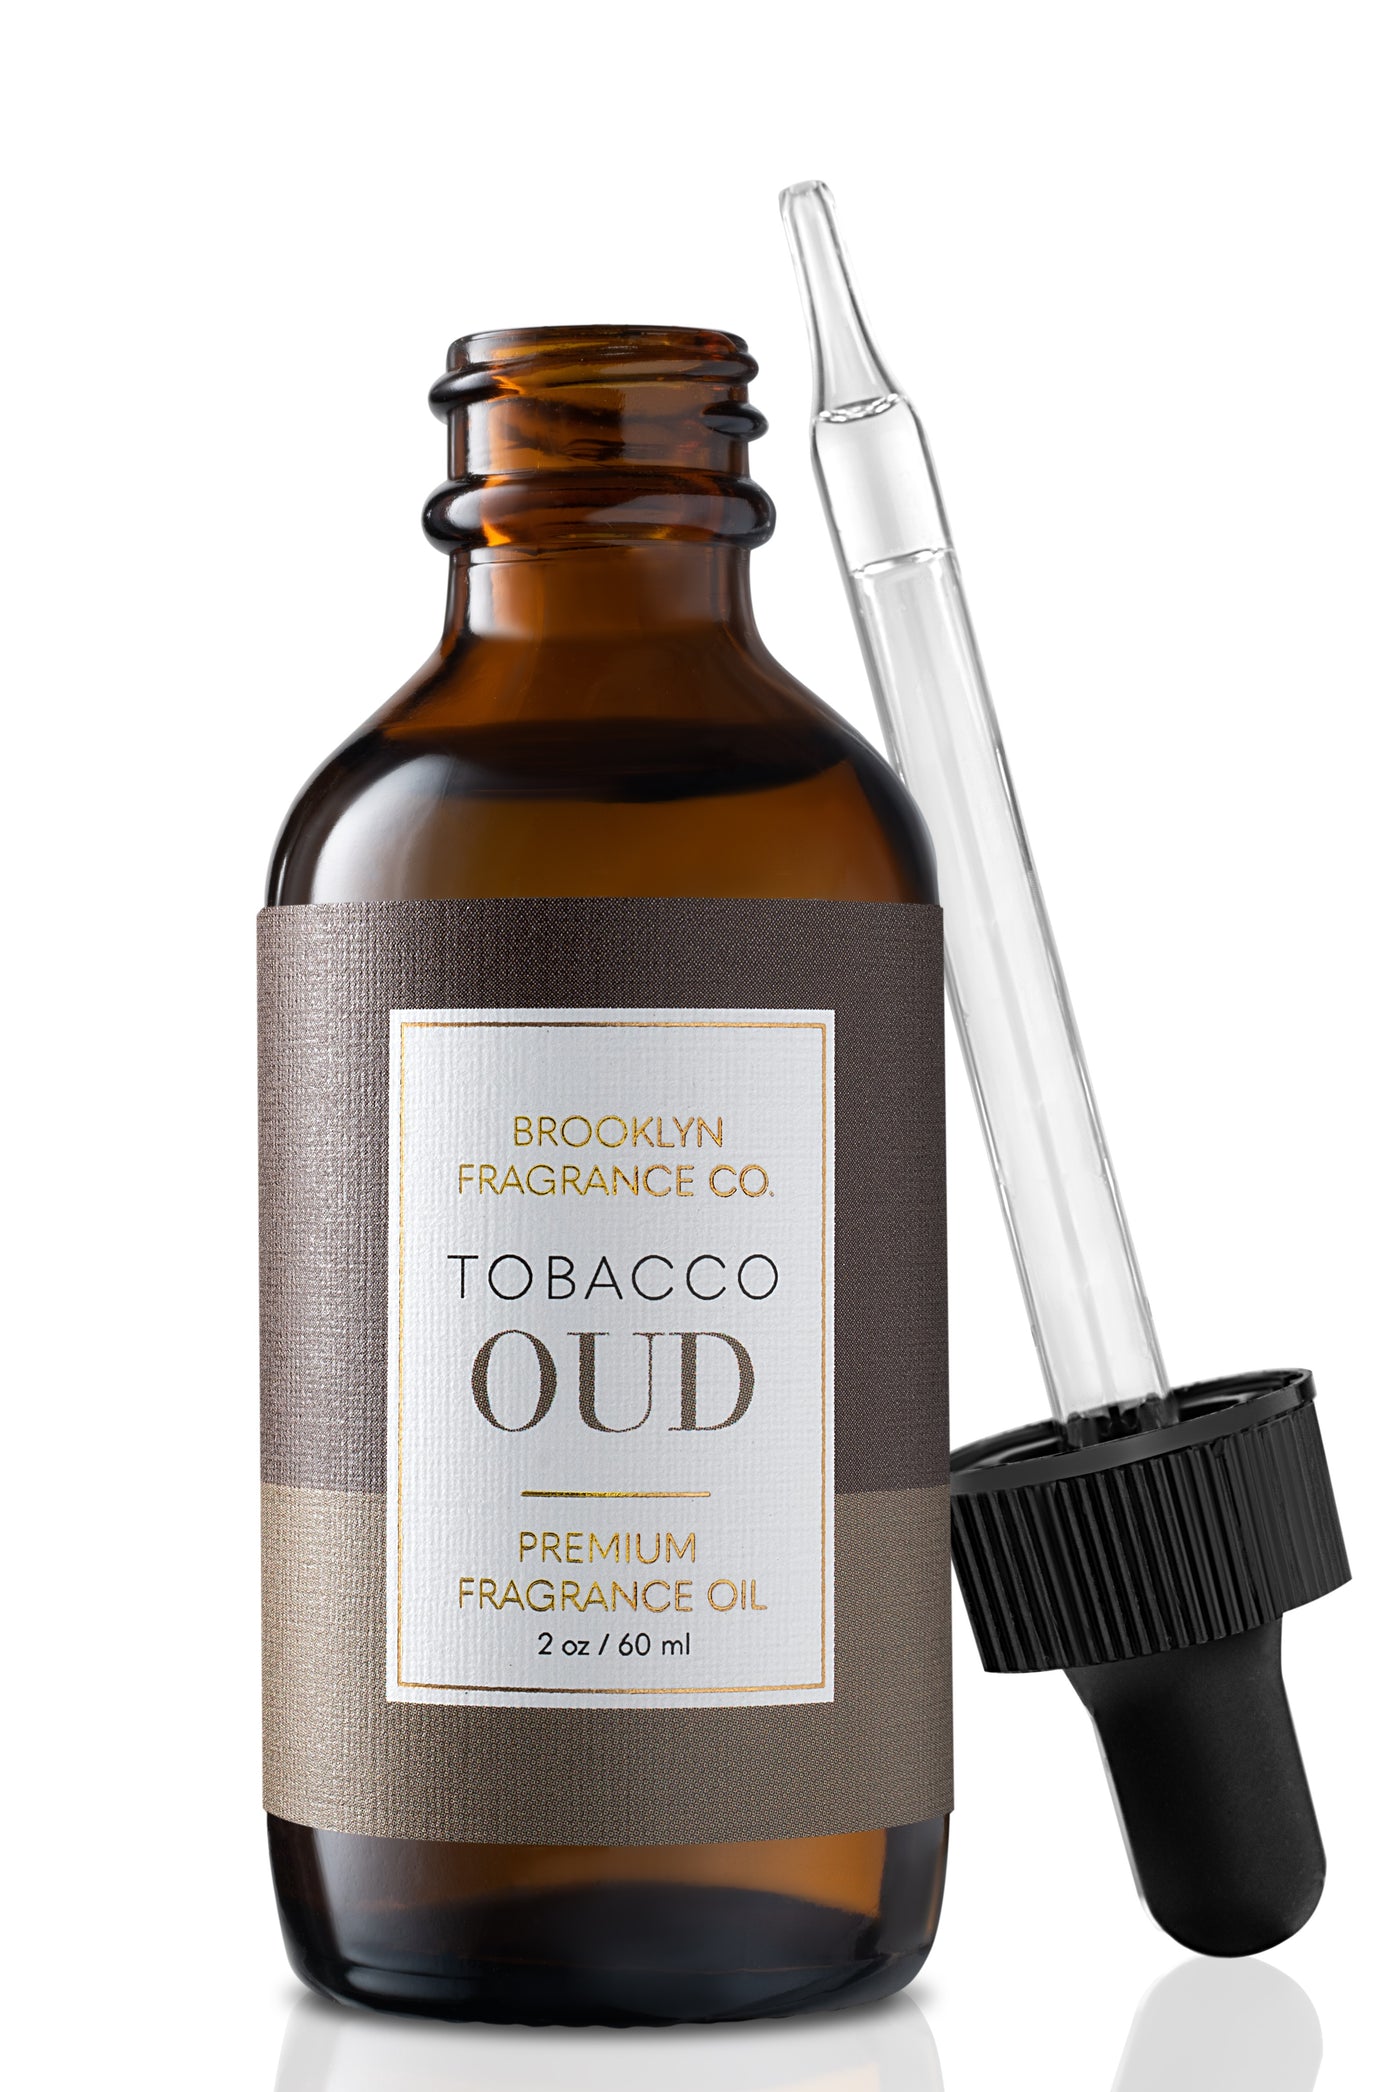 2 oz Premium Fragrance Oil - Tobacco Oud